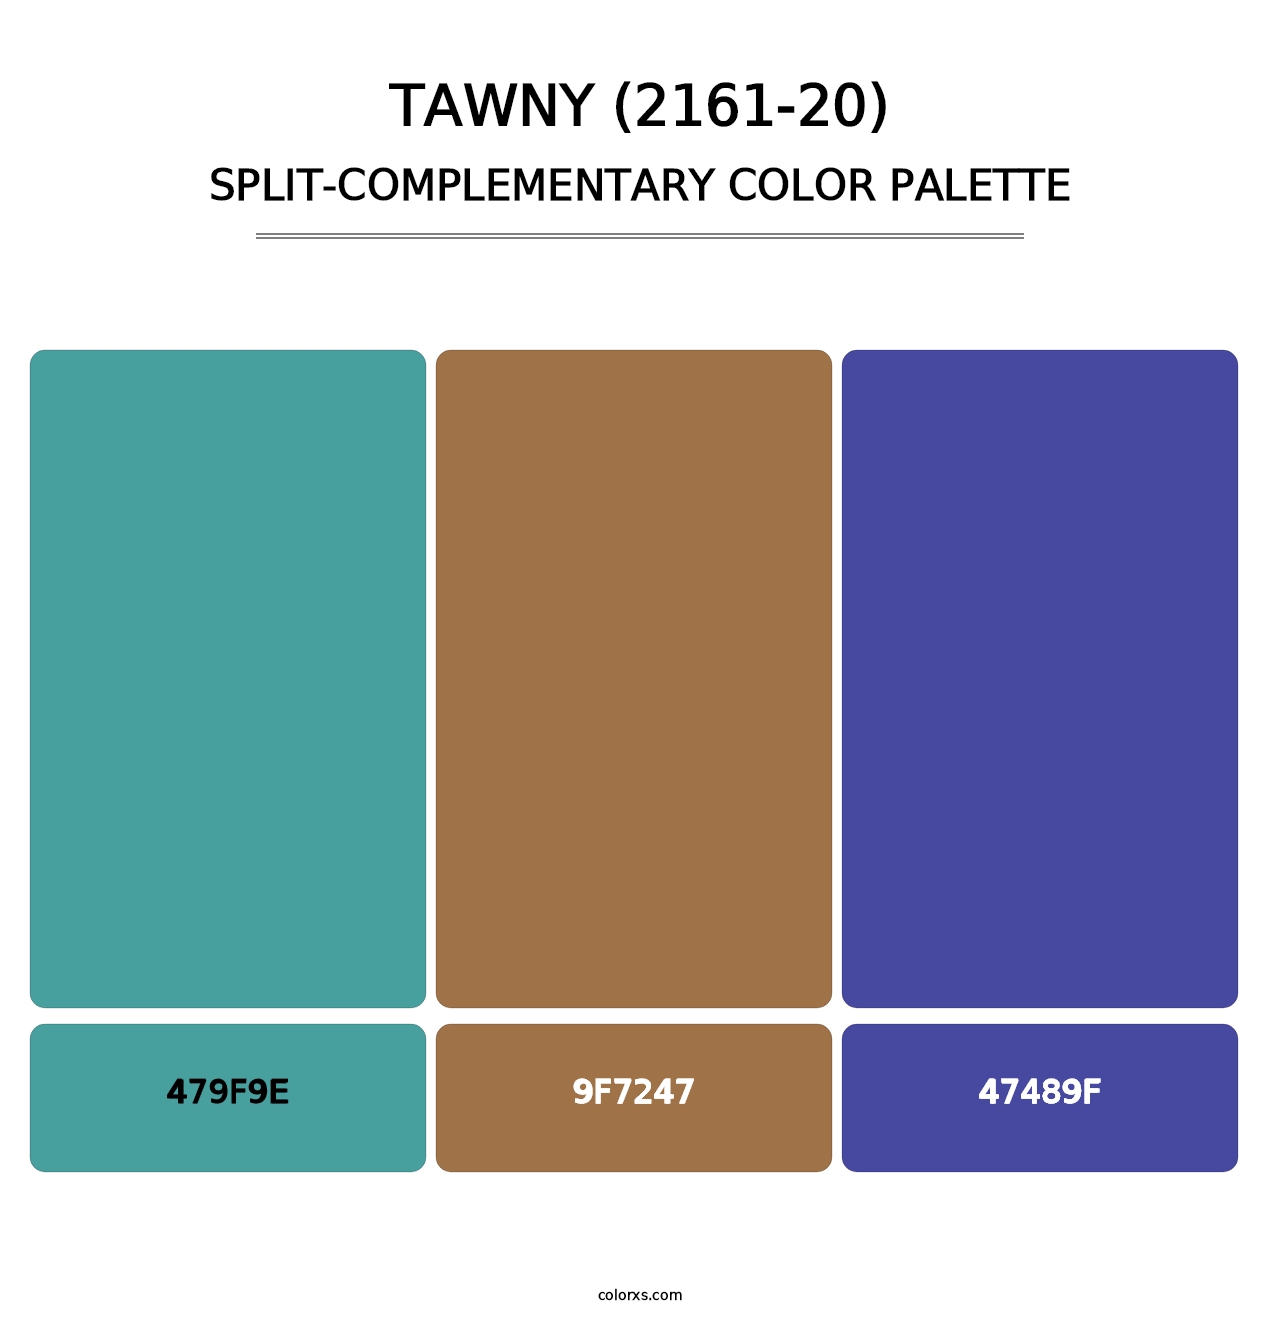 Tawny (2161-20) - Split-Complementary Color Palette